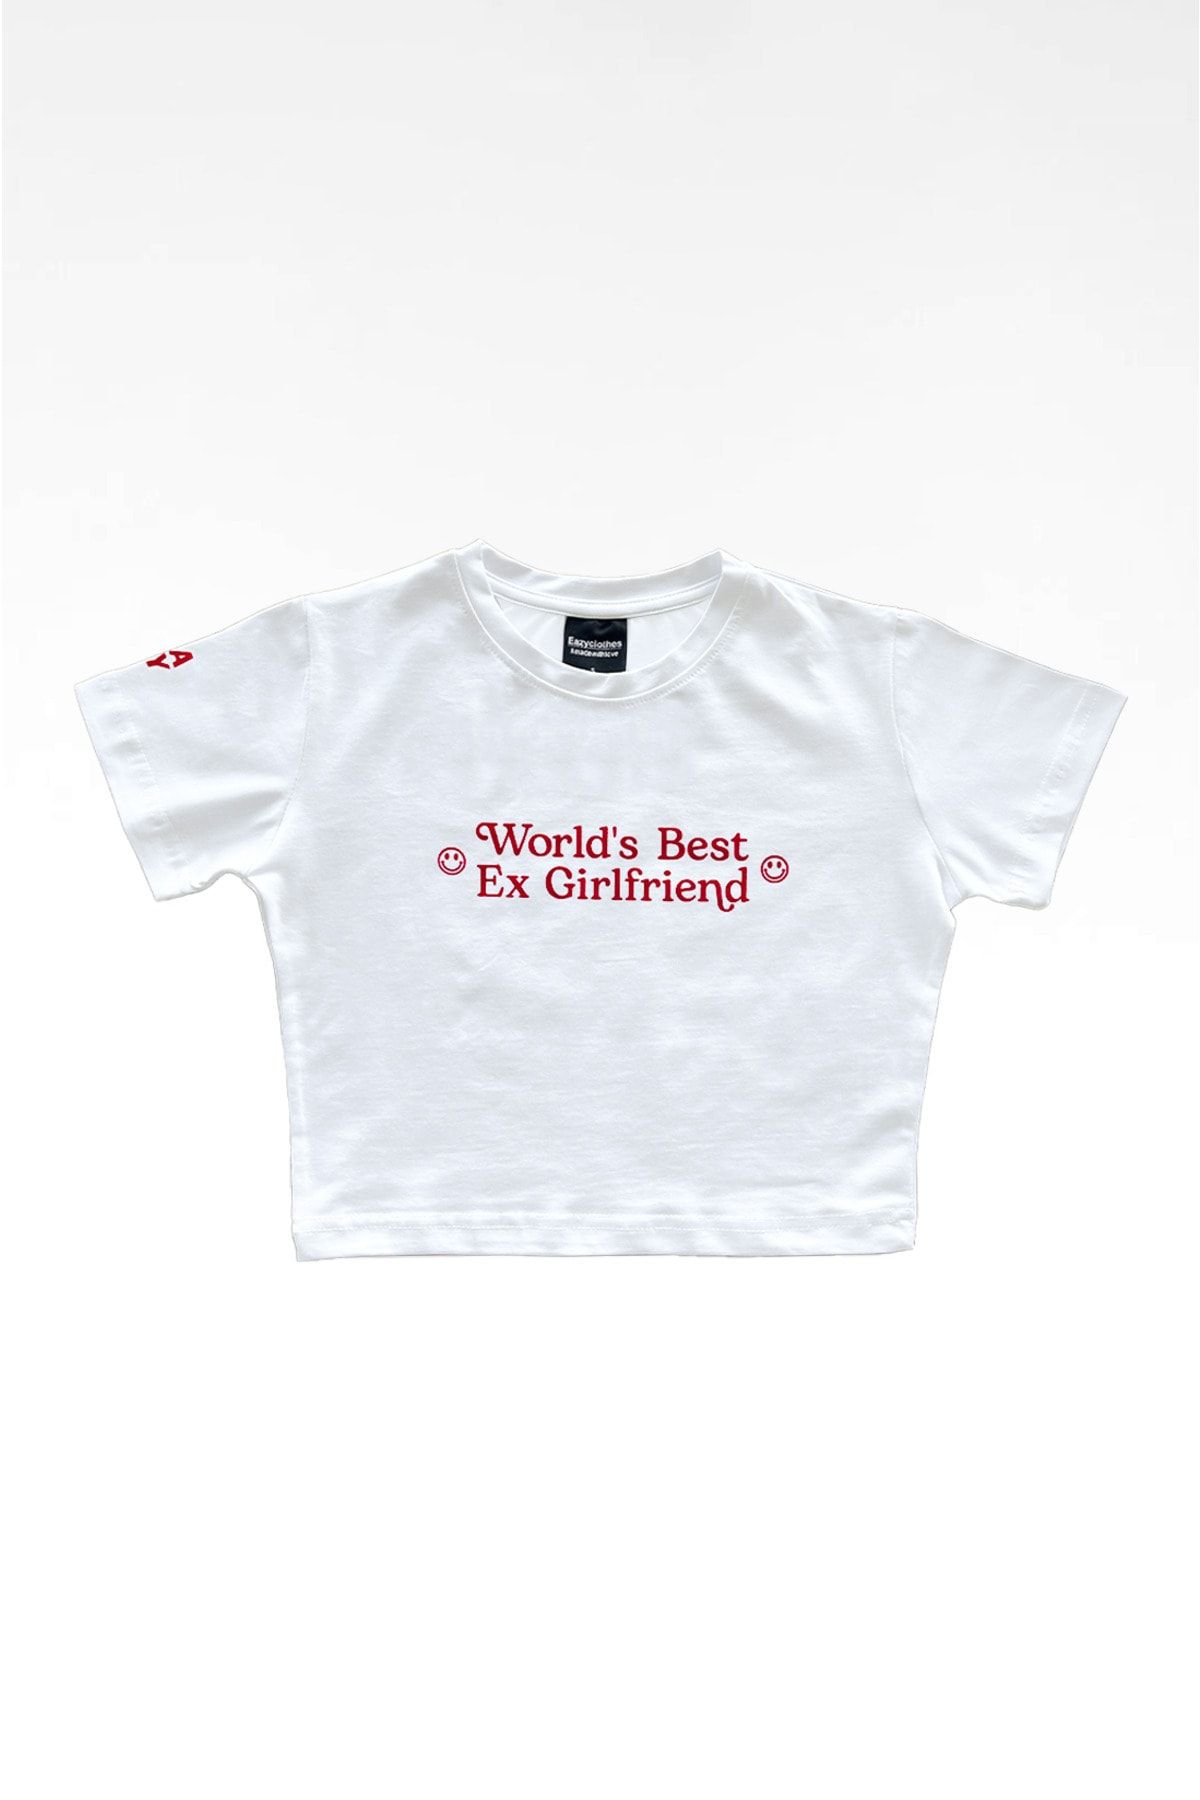 Eazy Co Best Ex Girlfriend Beyaz Crop Top Bisiklet Yaka Kısa Kollu T-Shirt